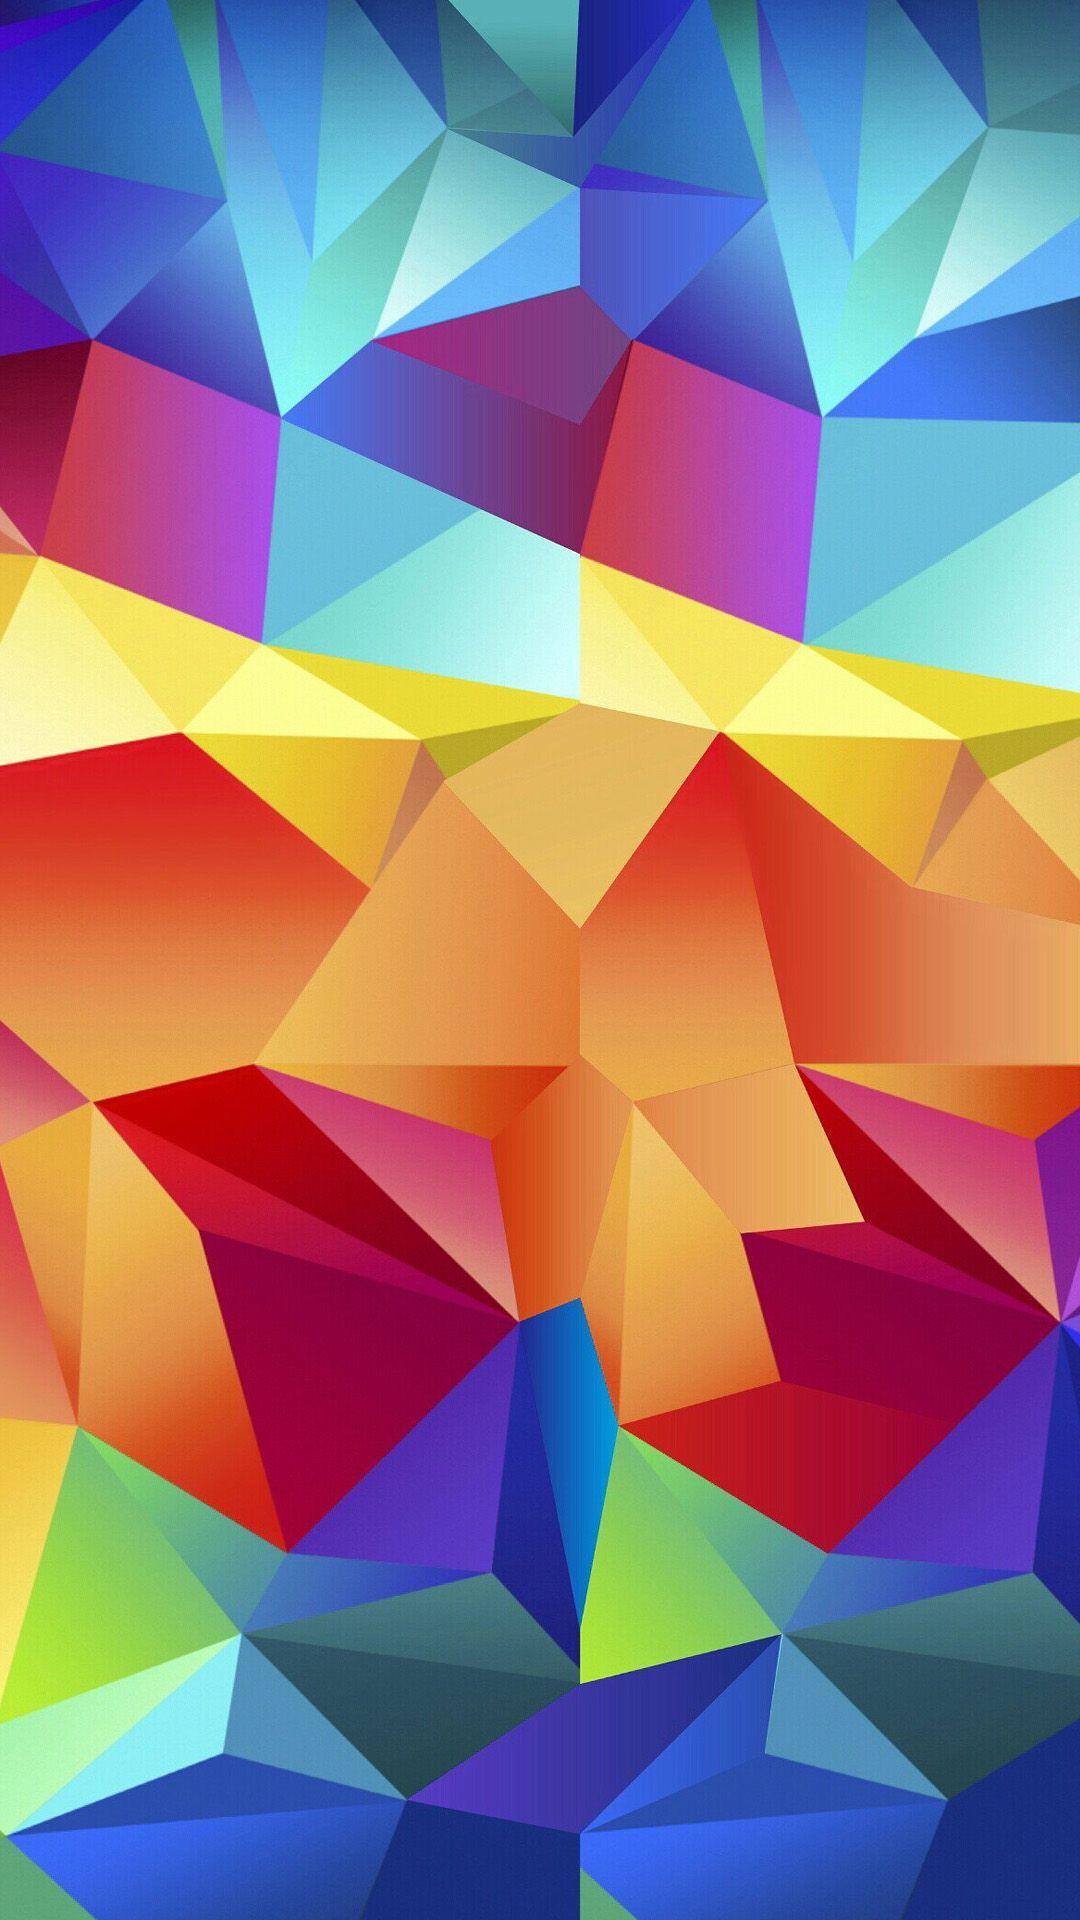 Random Triangle Wallpapers - Top Free